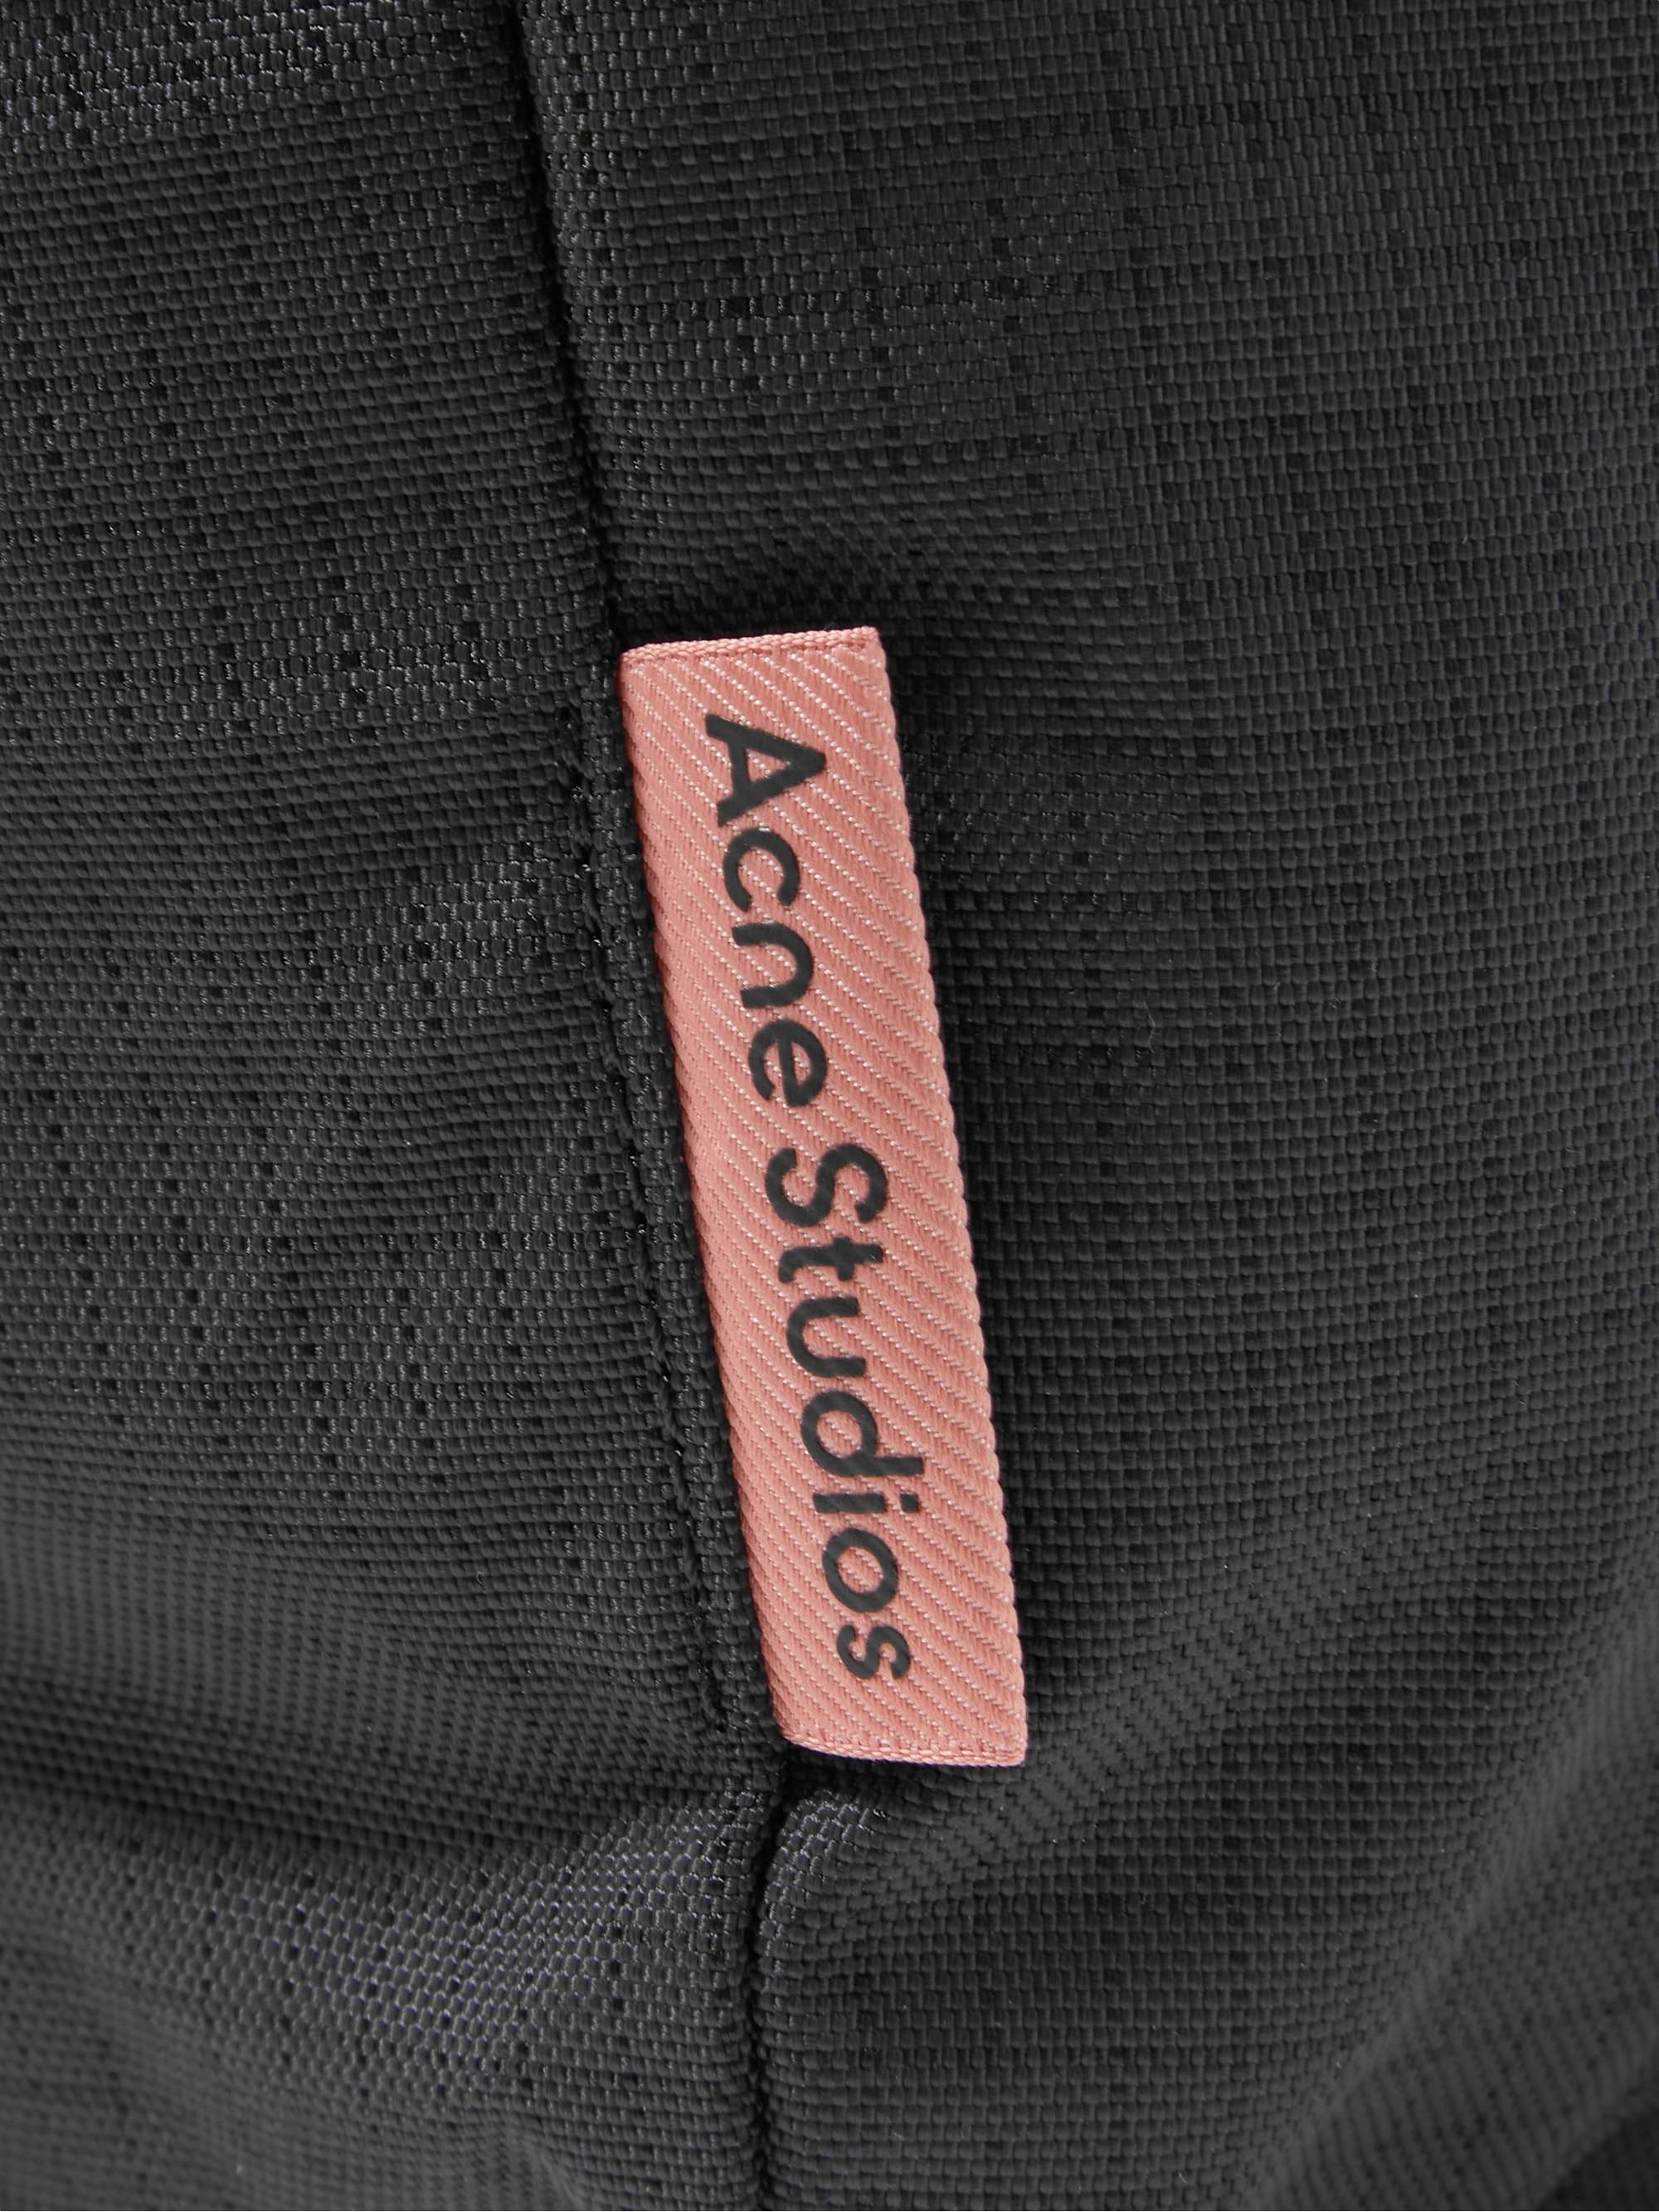 ACNE STUDIOS Logo-Embossed Suede-Trimmed Nylon-Ripstop Backpack